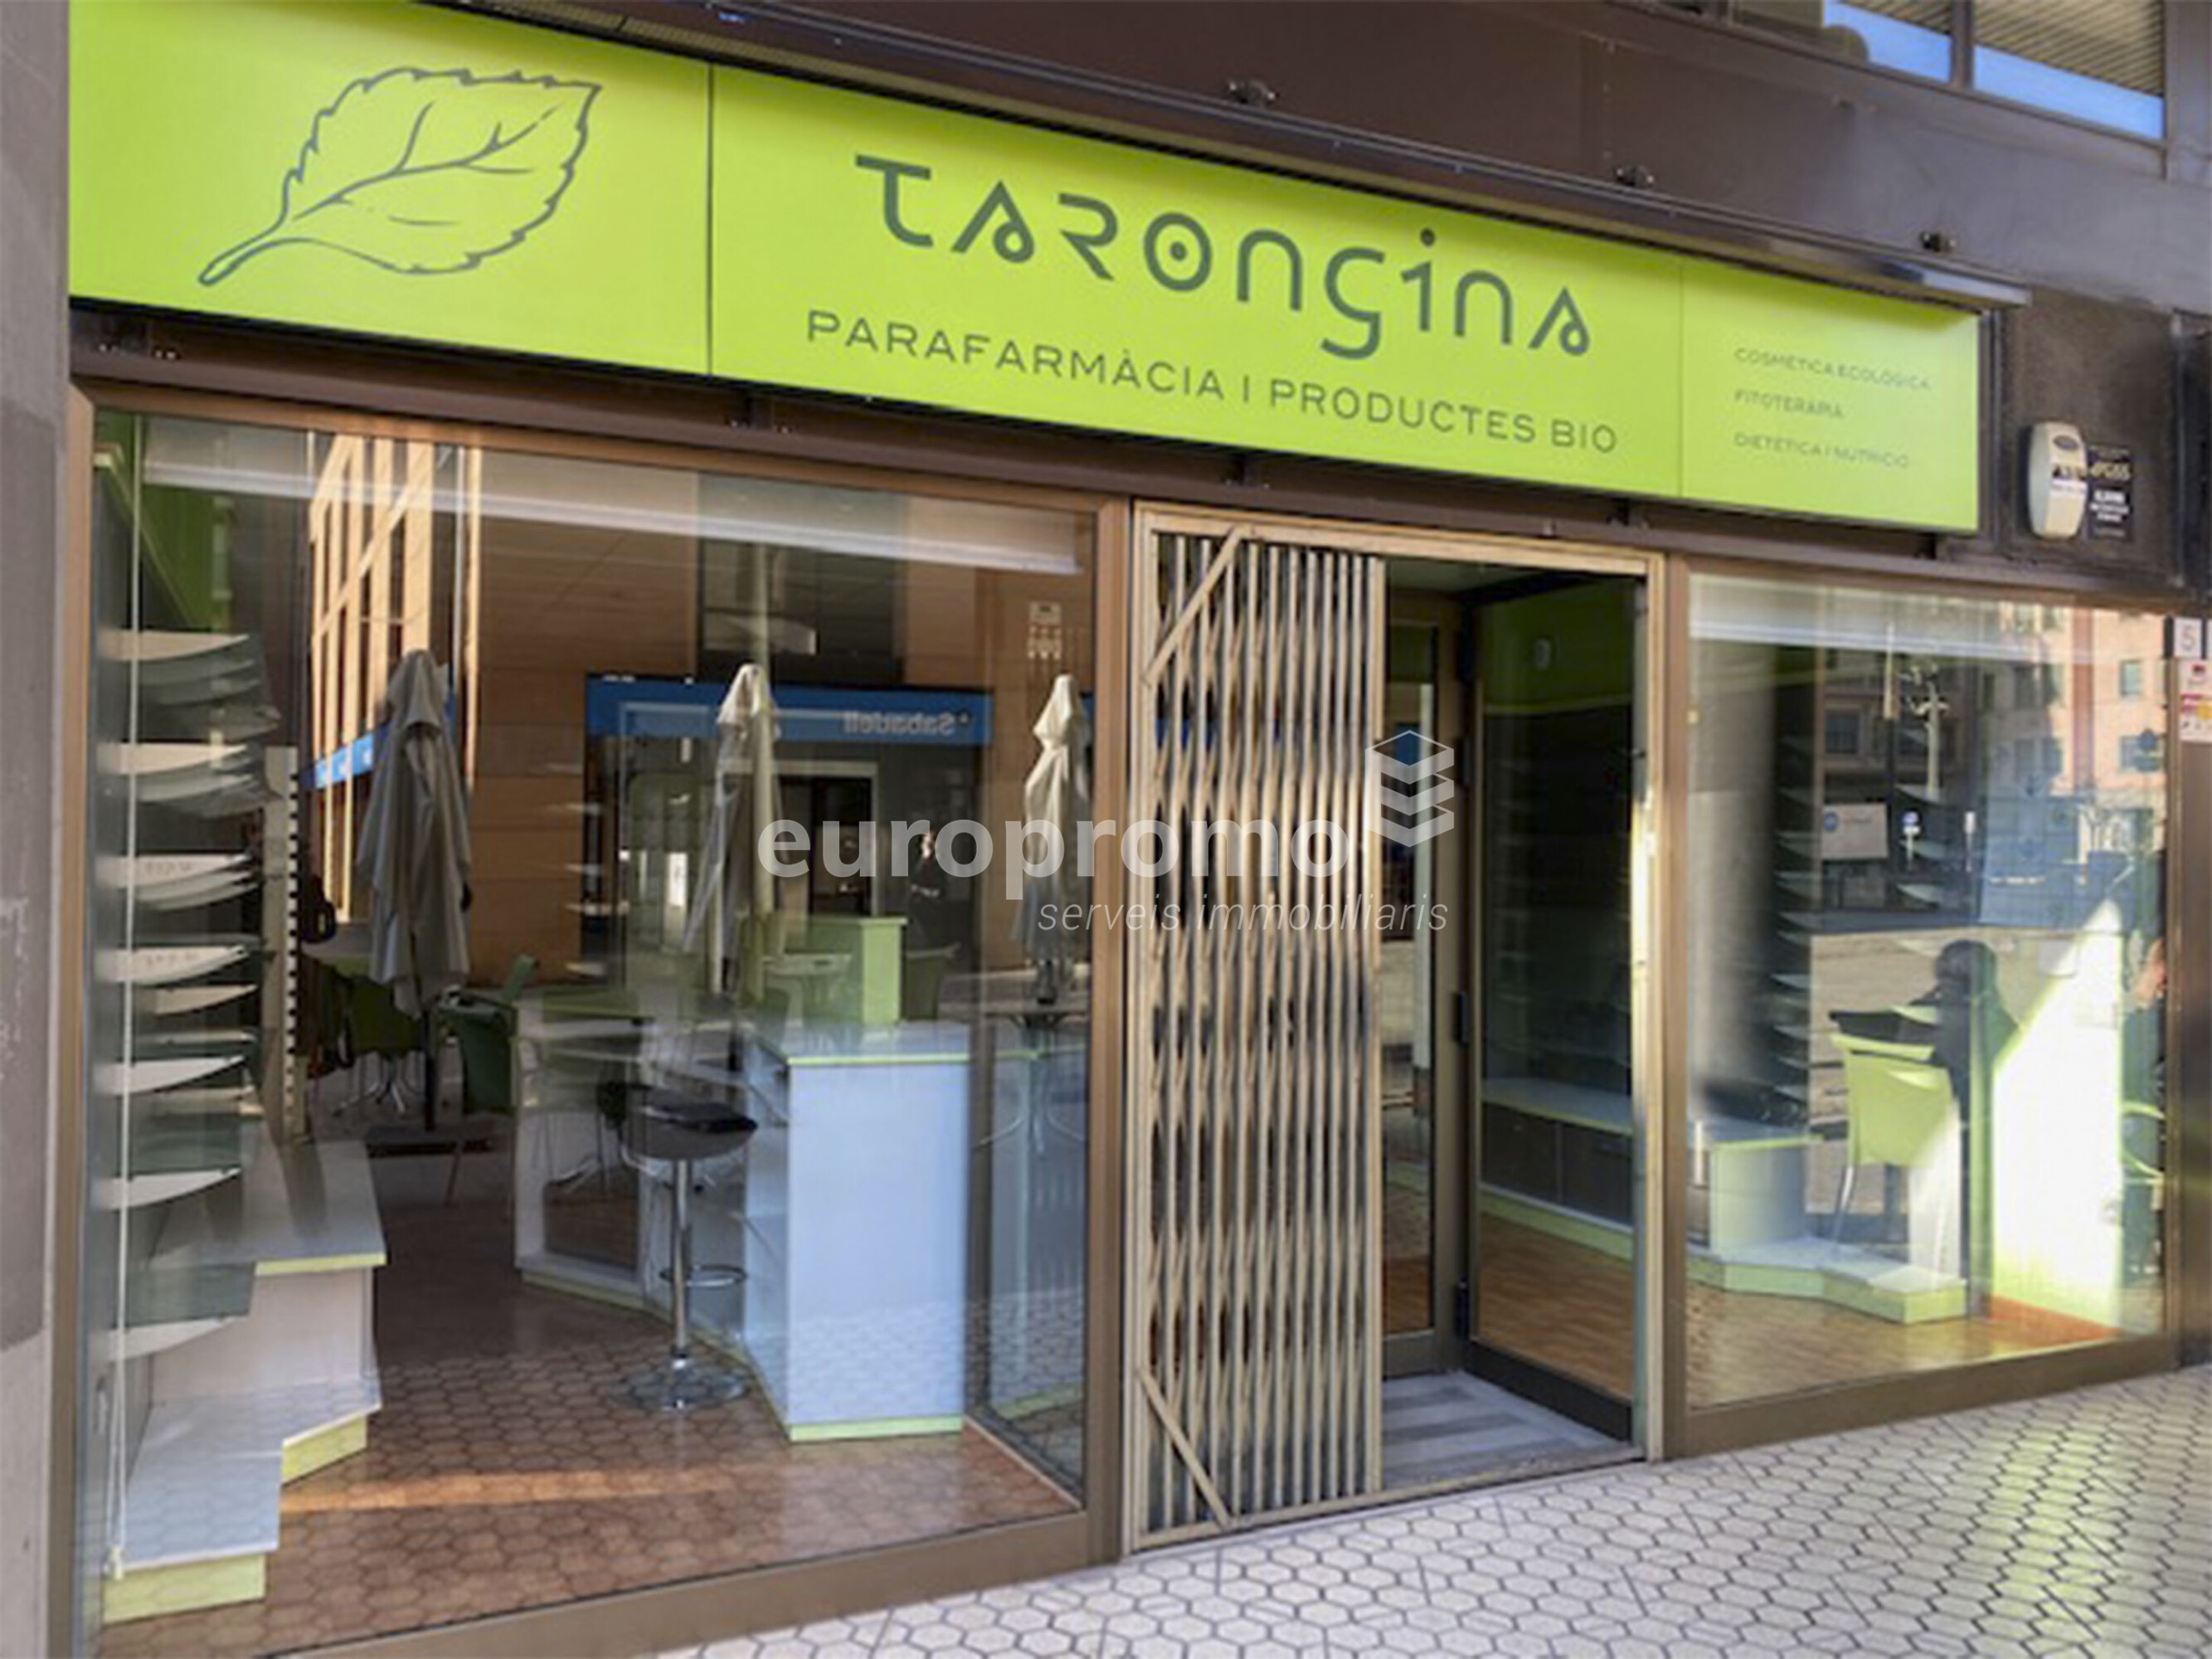 Local comercial de 60m2 situado en el centro de Girona en Plaza Josep Pla!